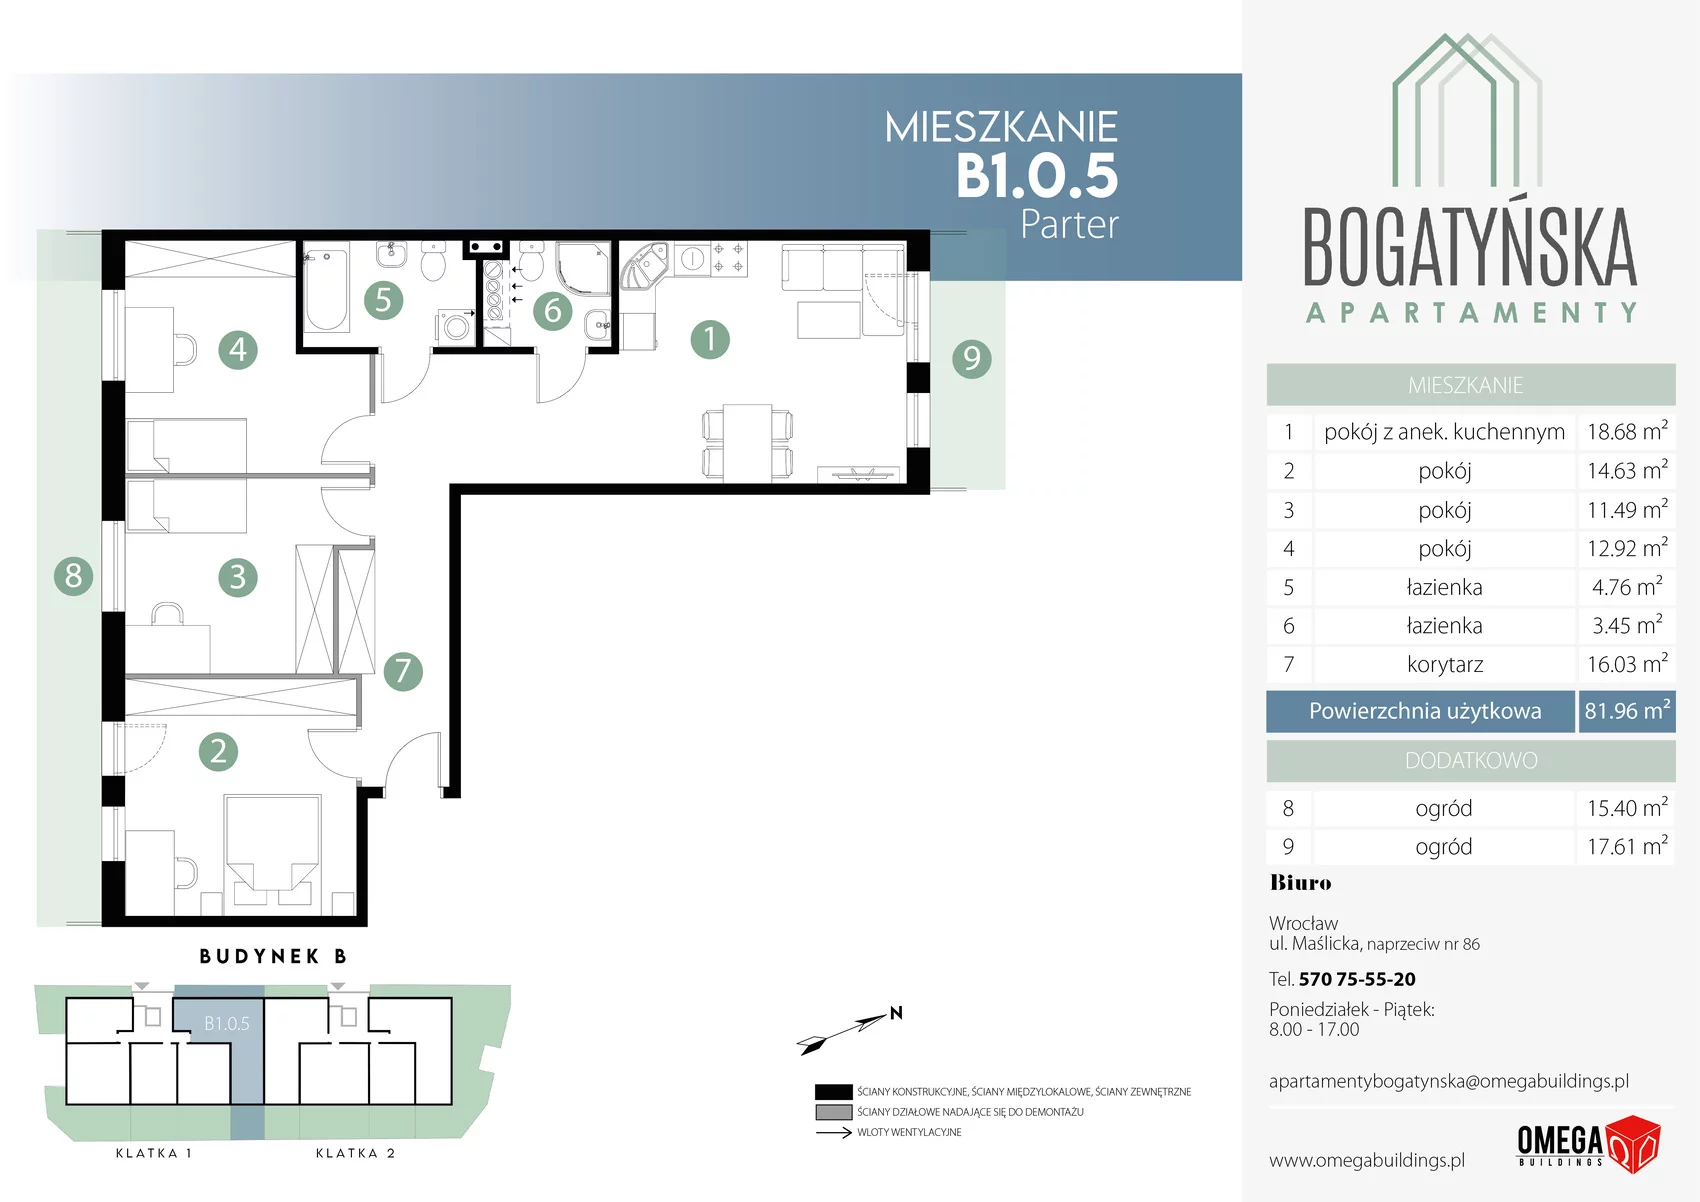 Apartament 81,96 m², parter, oferta nr B1.0.5, Bogatyńska Apartamenty, Wrocław, Maślice, Fabryczna, ul. Bogatyńska